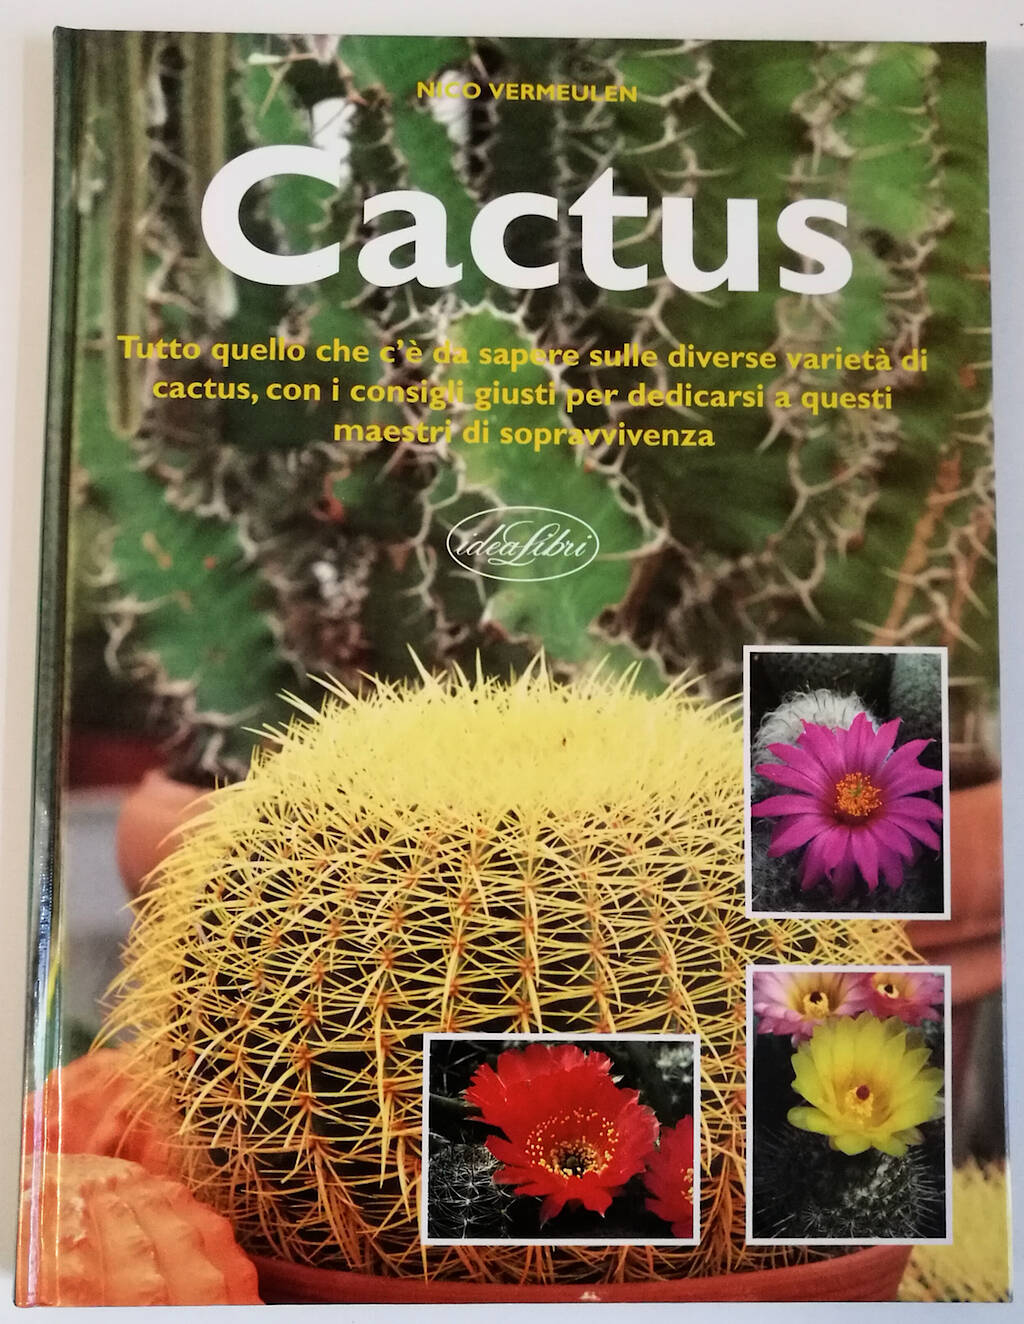 Cactus Nico Vermeulen